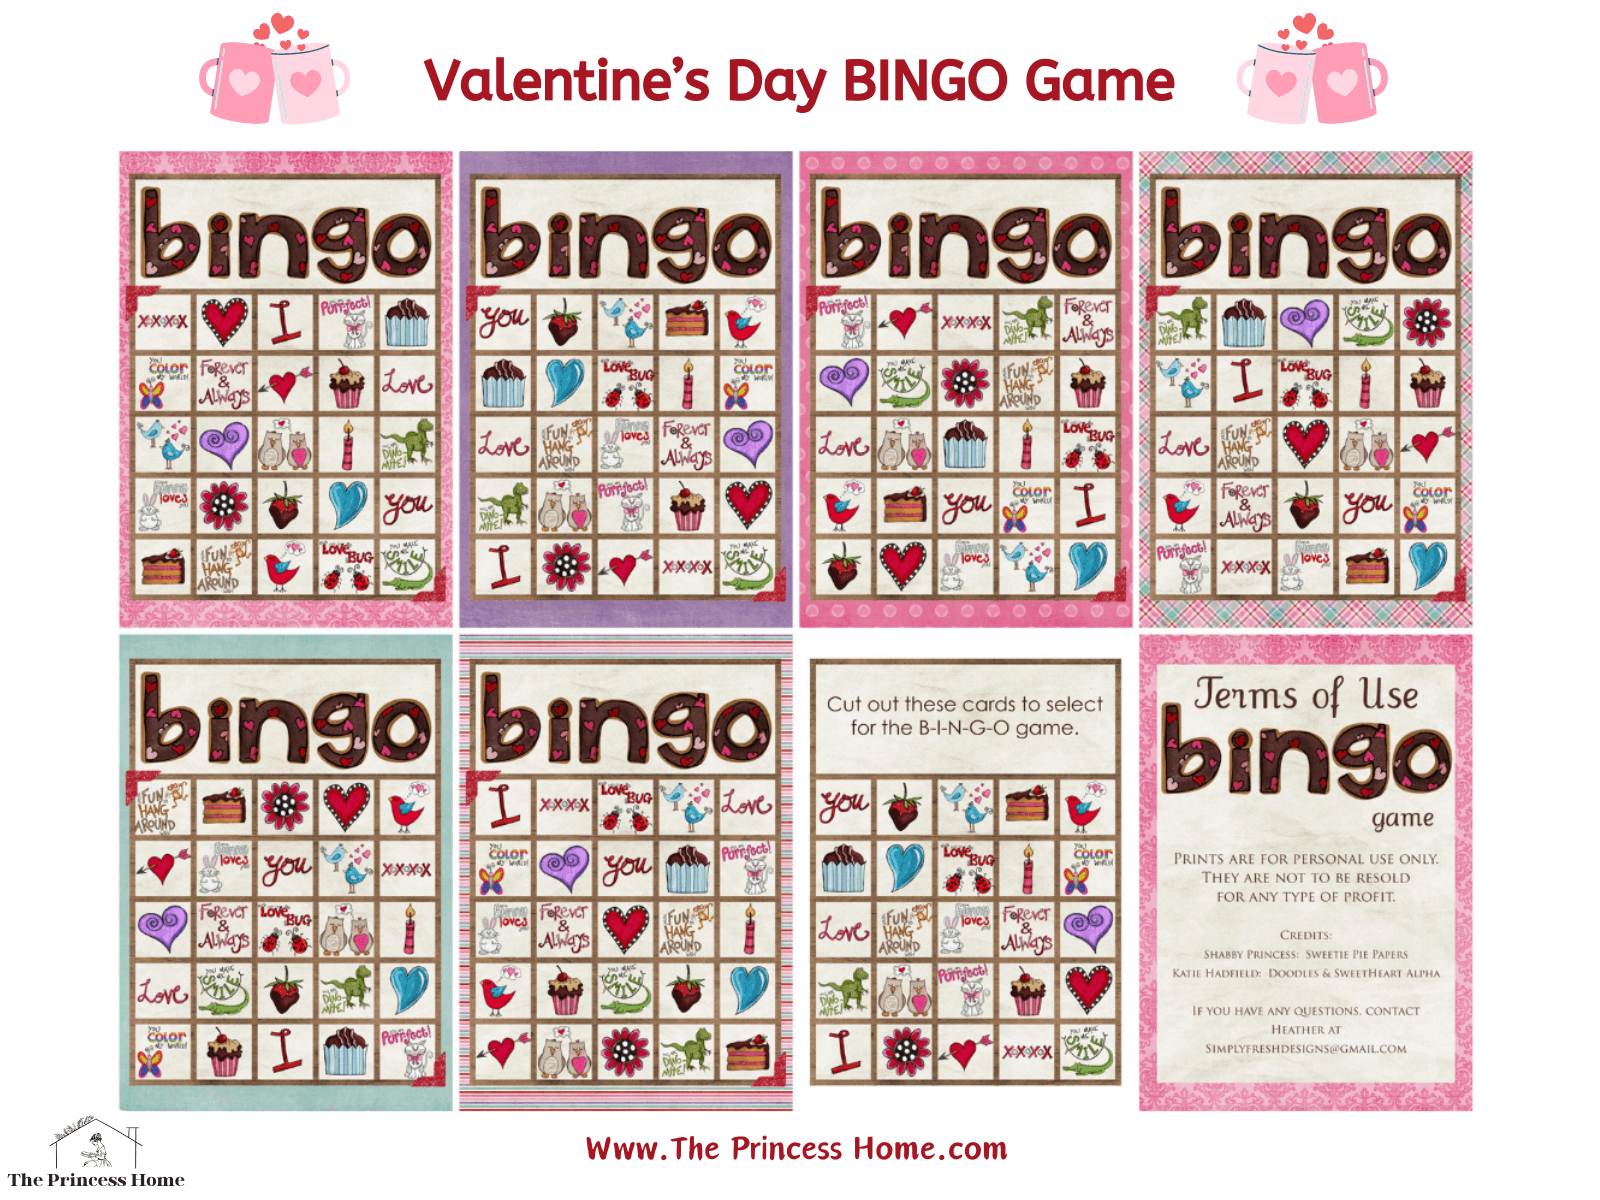 4.Love Bingo: